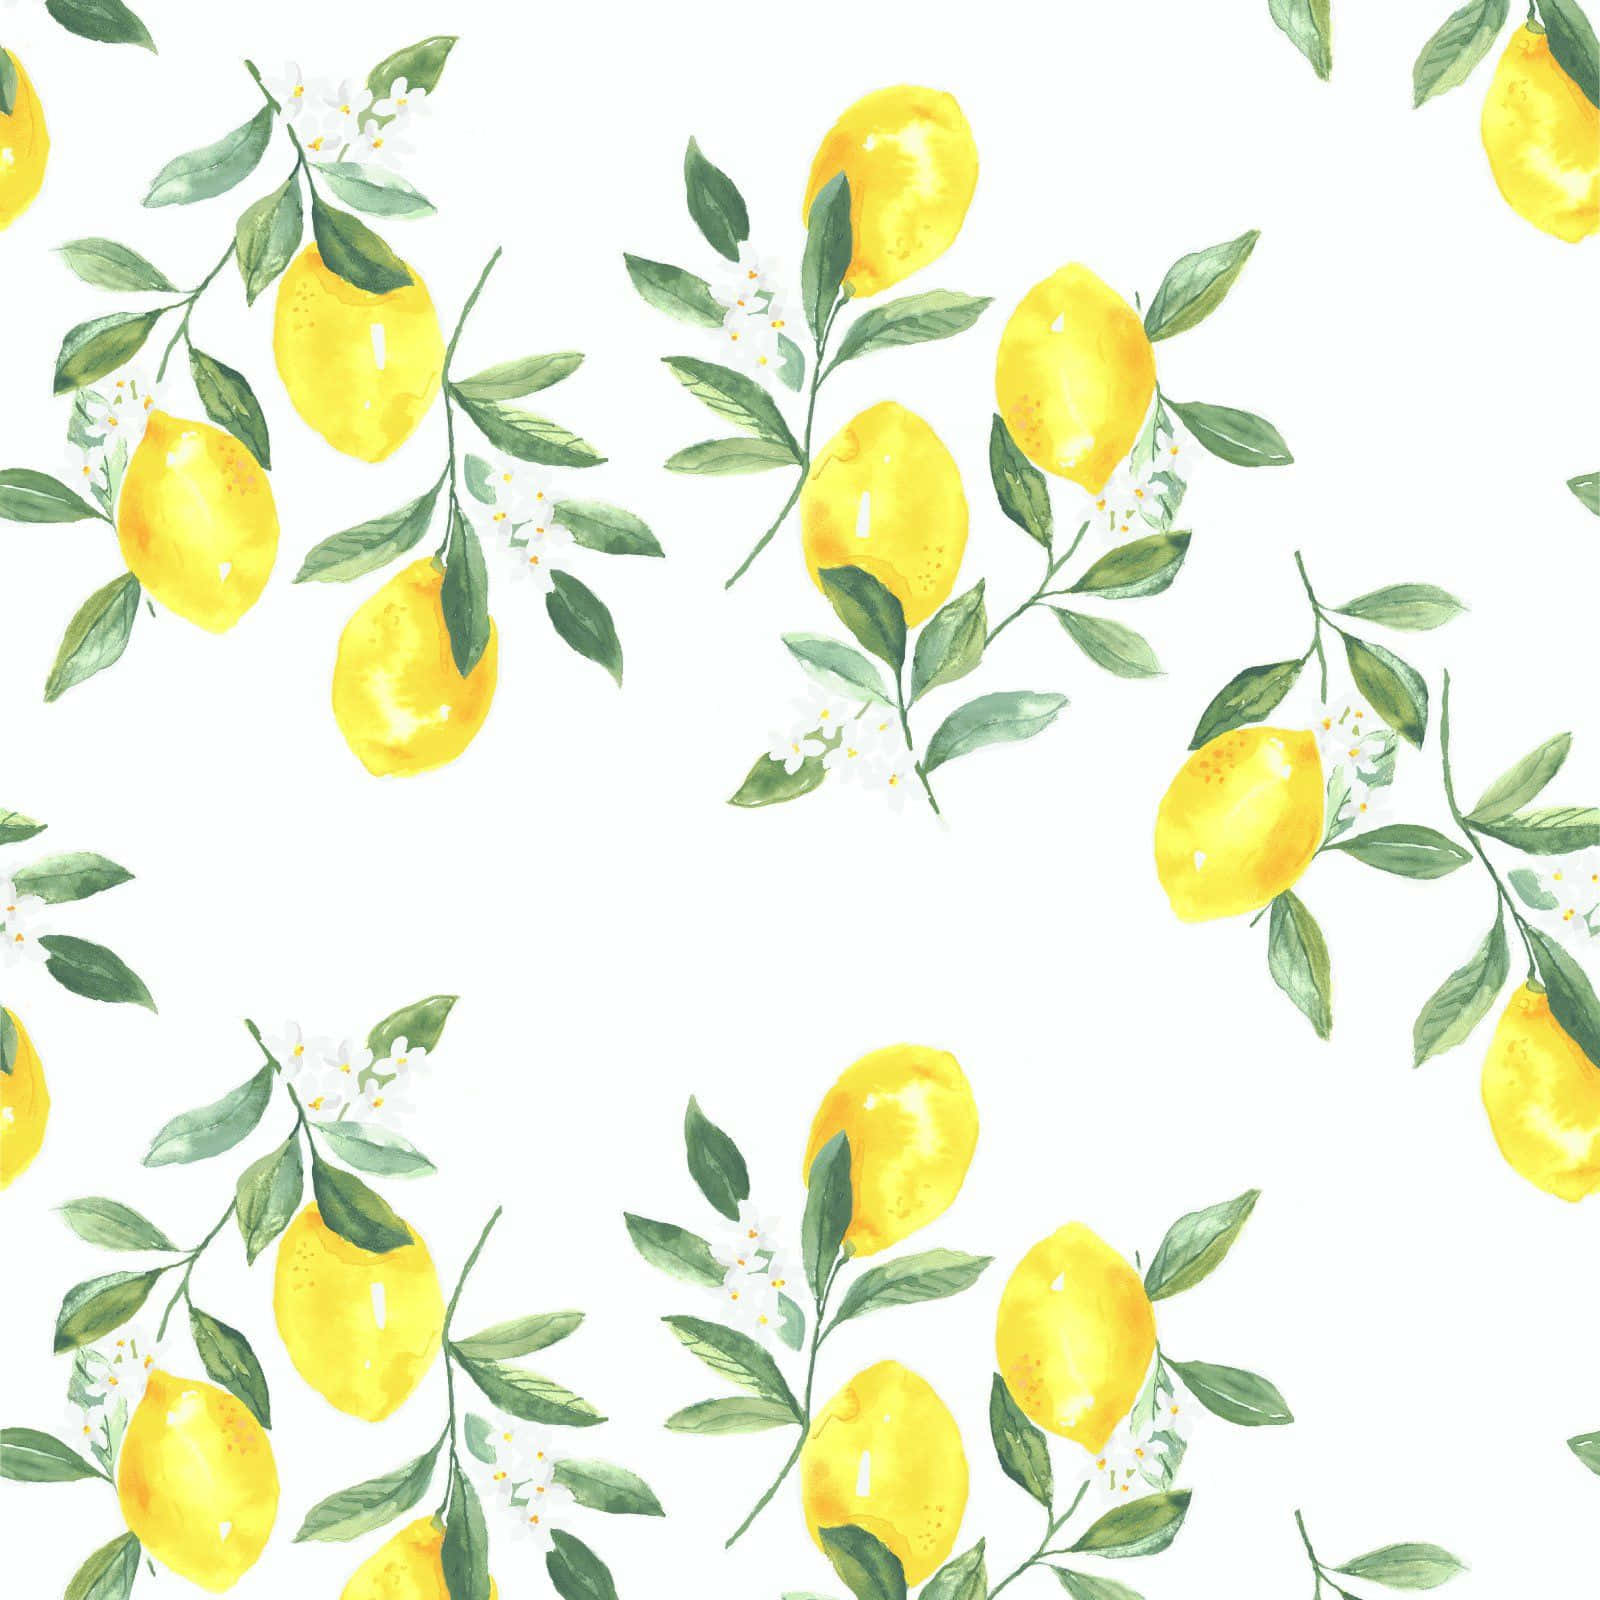 Lemons And Leaves Pattern Iphone Wallpaper